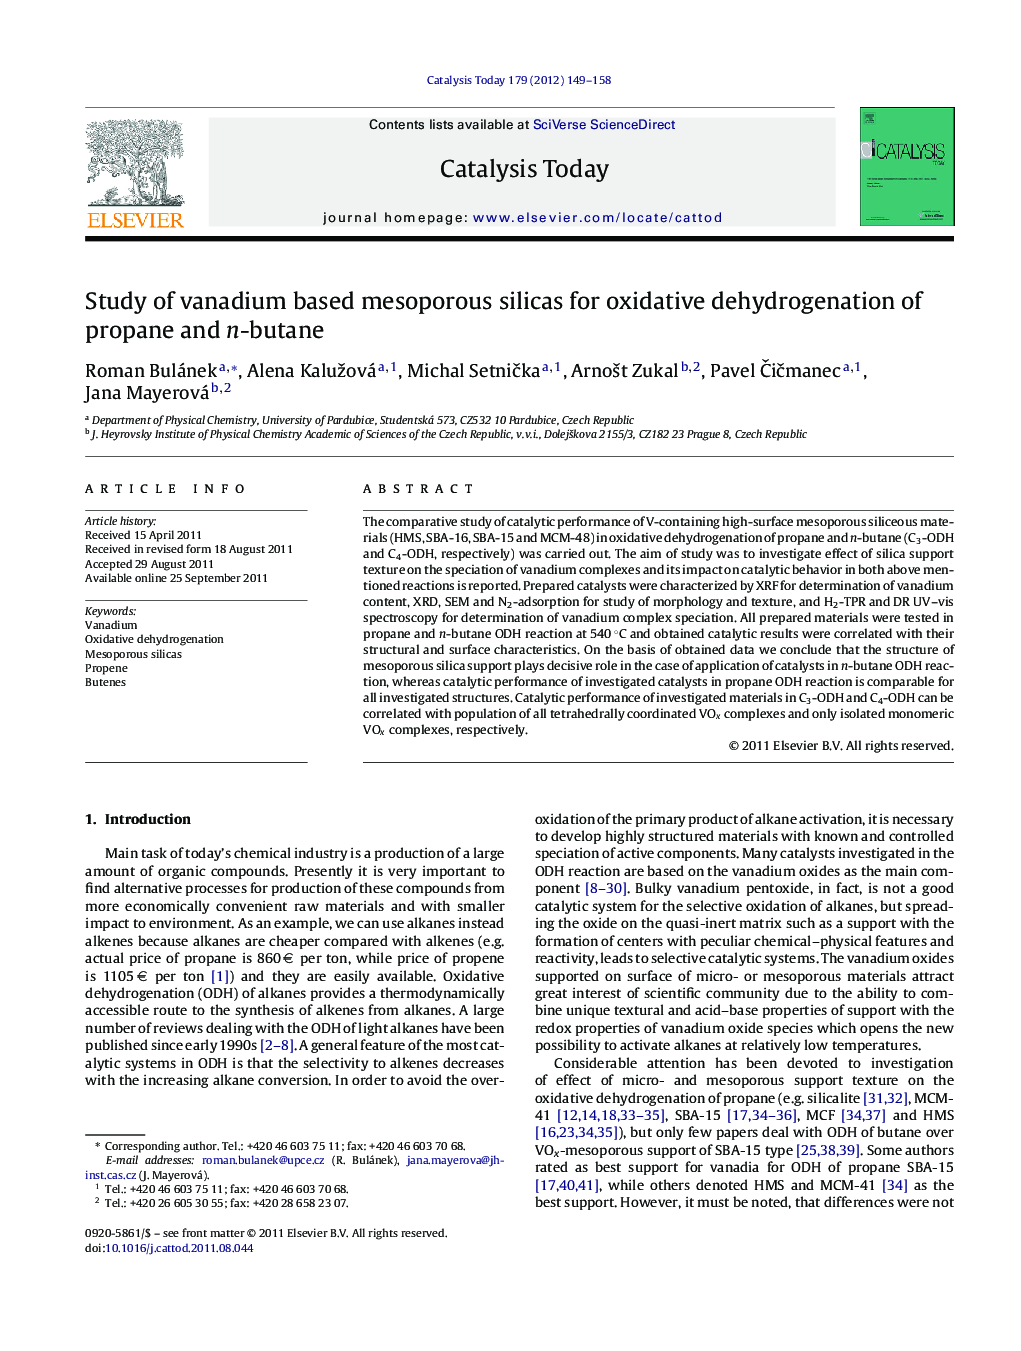 Study of vanadium based mesoporous silicas for oxidative dehydrogenation of propane and n-butane